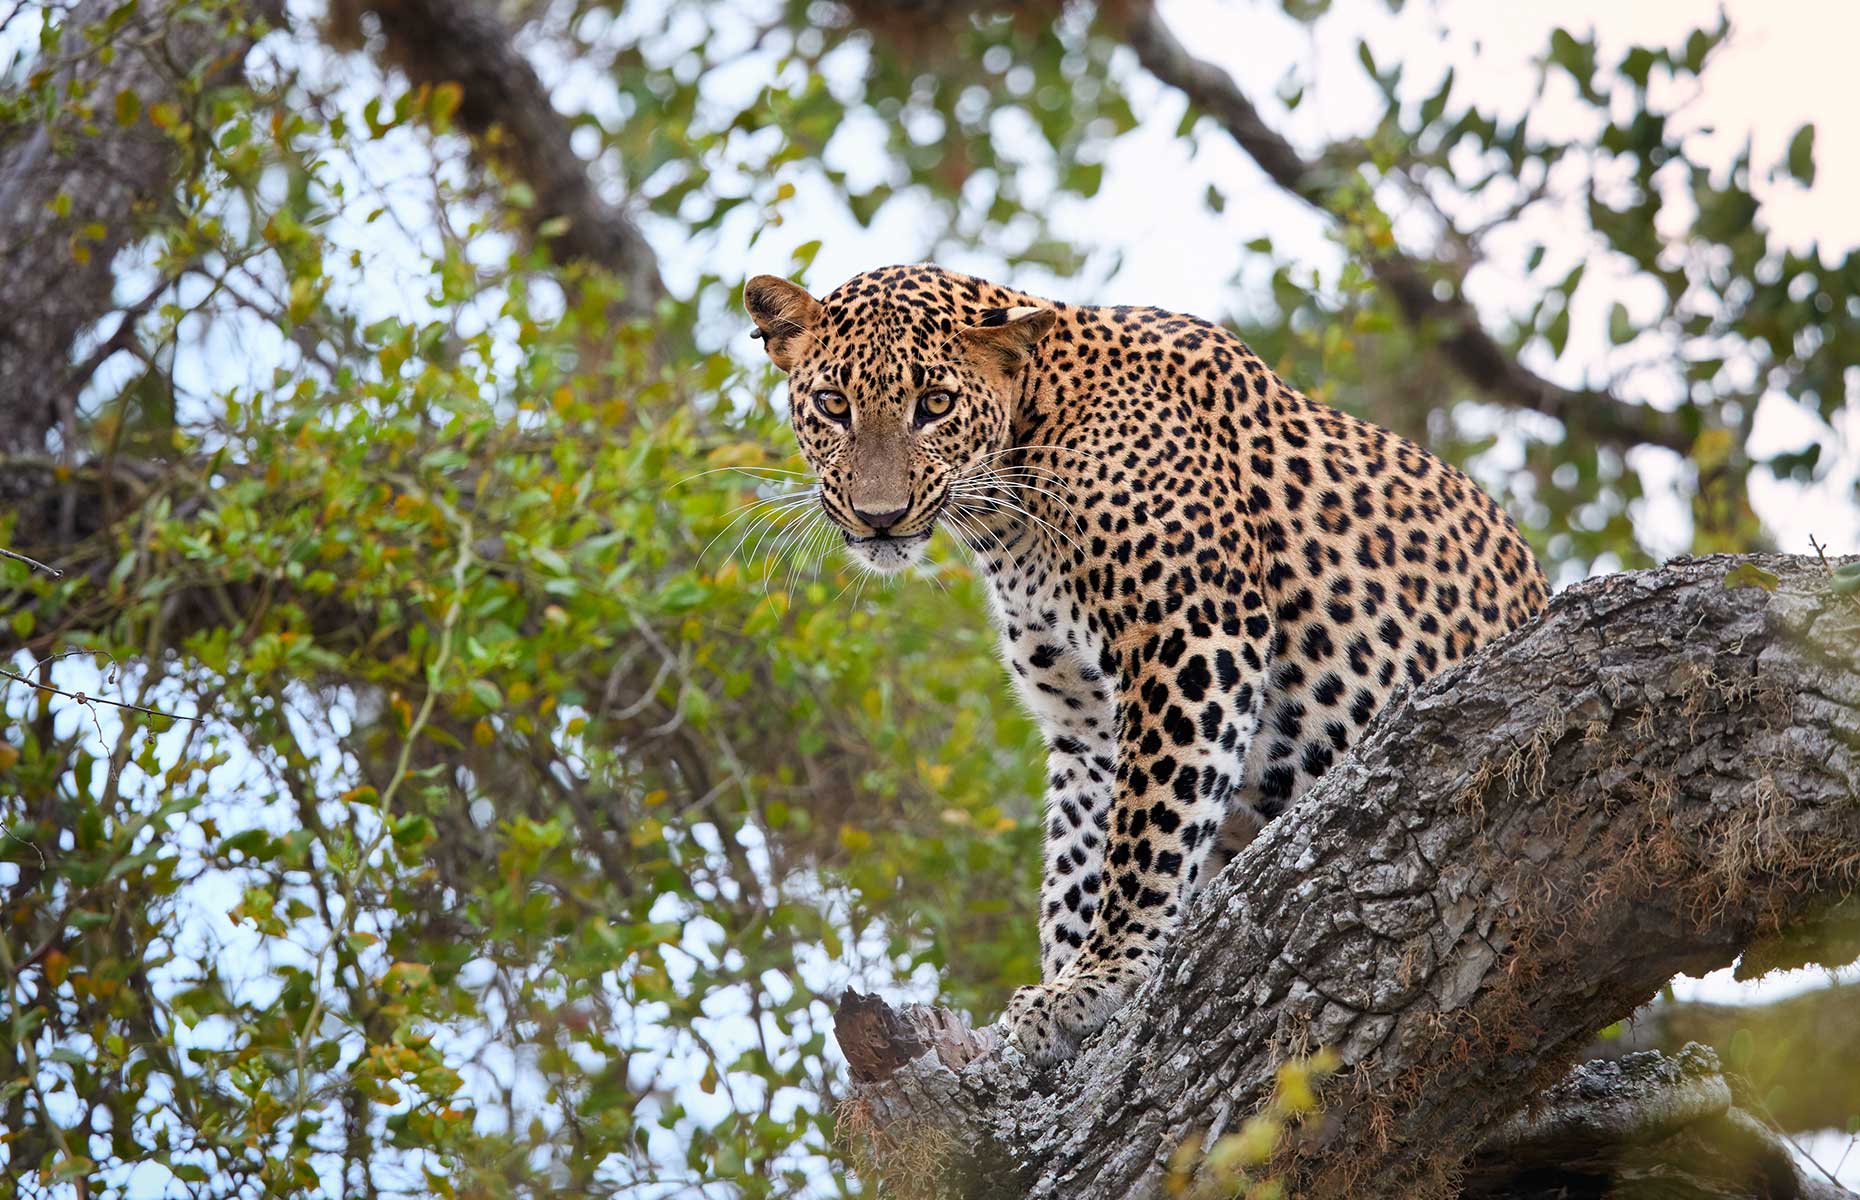 A male Sri Lankan Leopard in Yala National Park (Image: Martin Mecnarowski/Shutterstock)